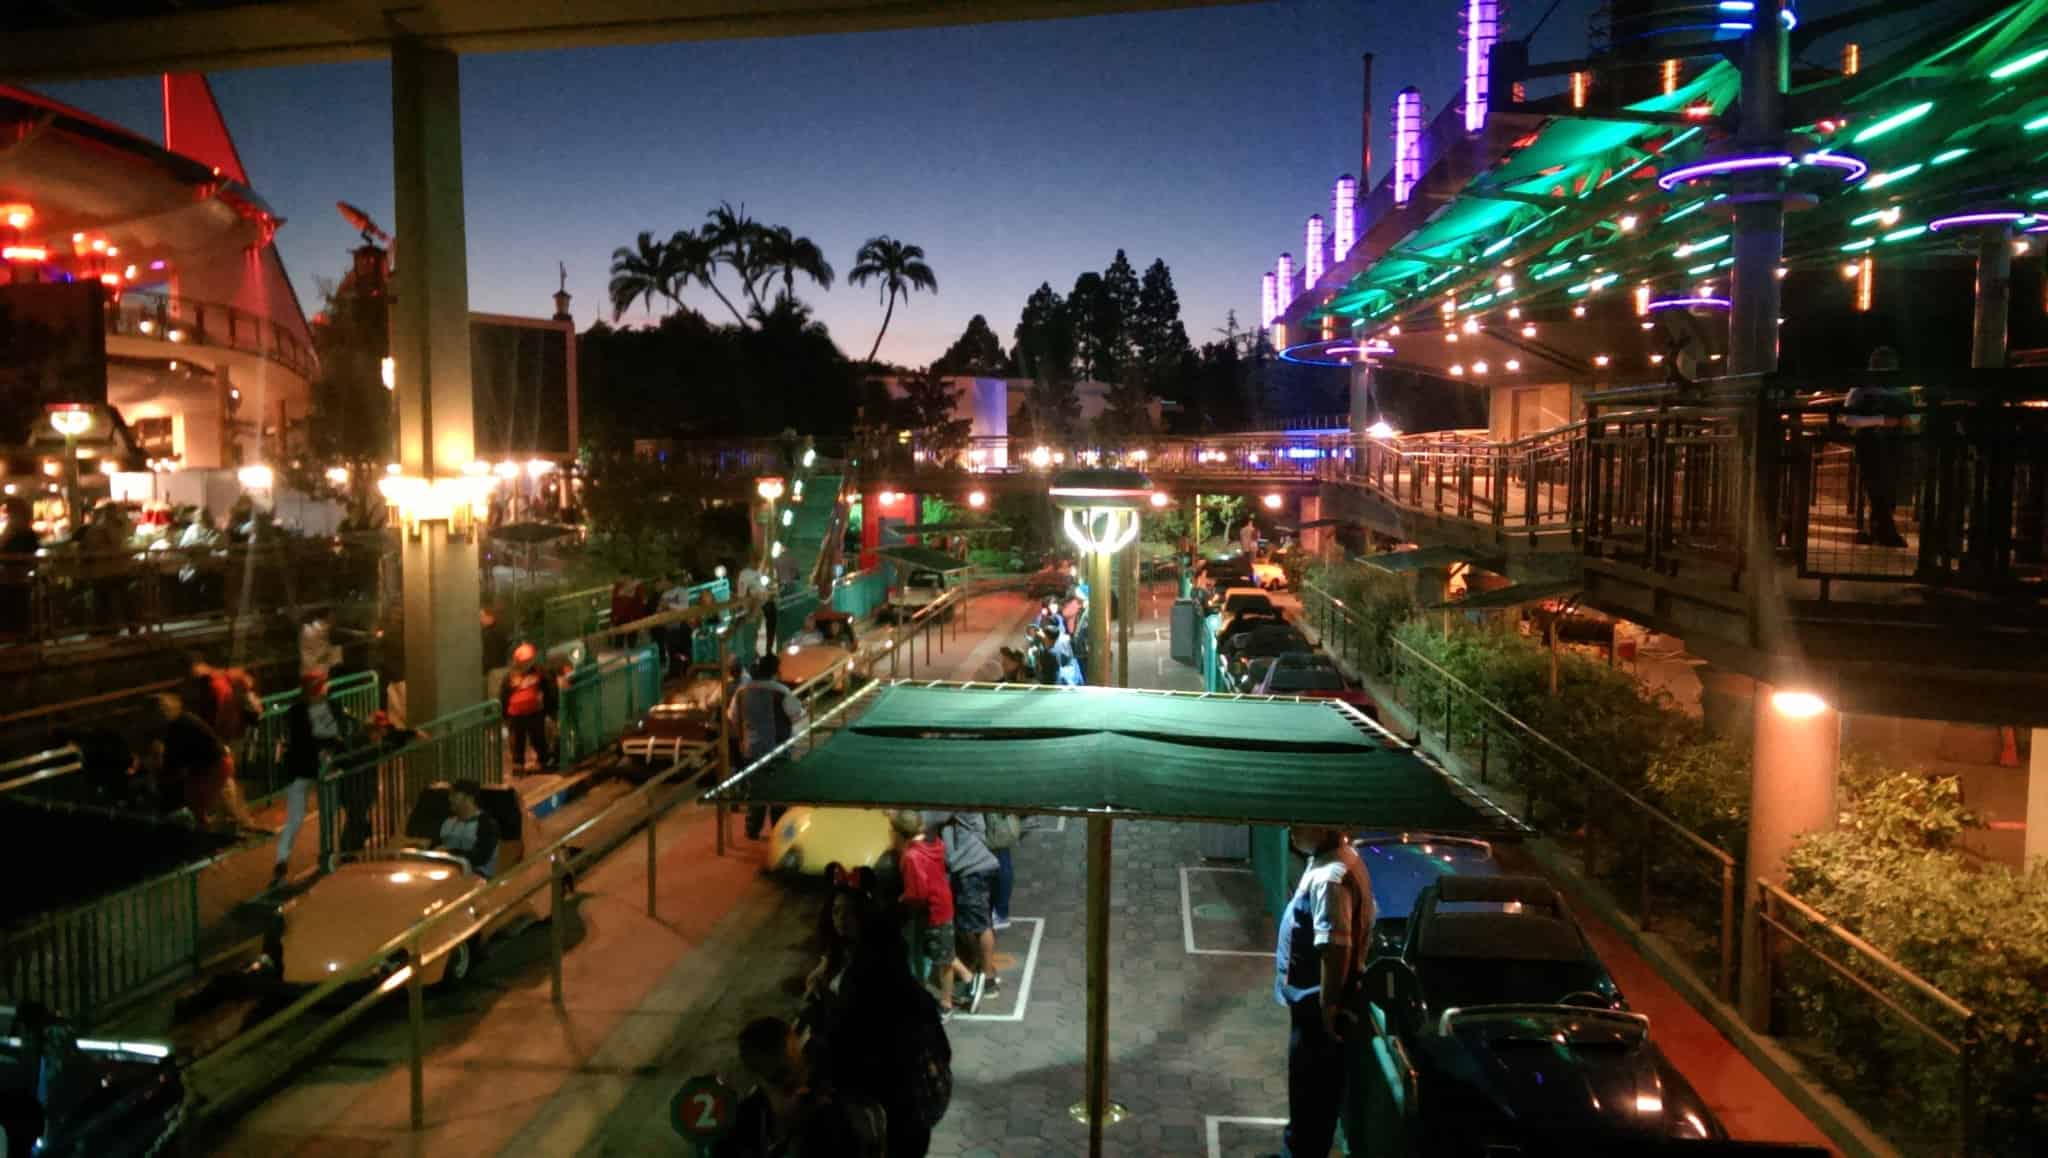 Disneyland Autopia at night, Tomorrowland Terrace and Star Wars Launch Bay